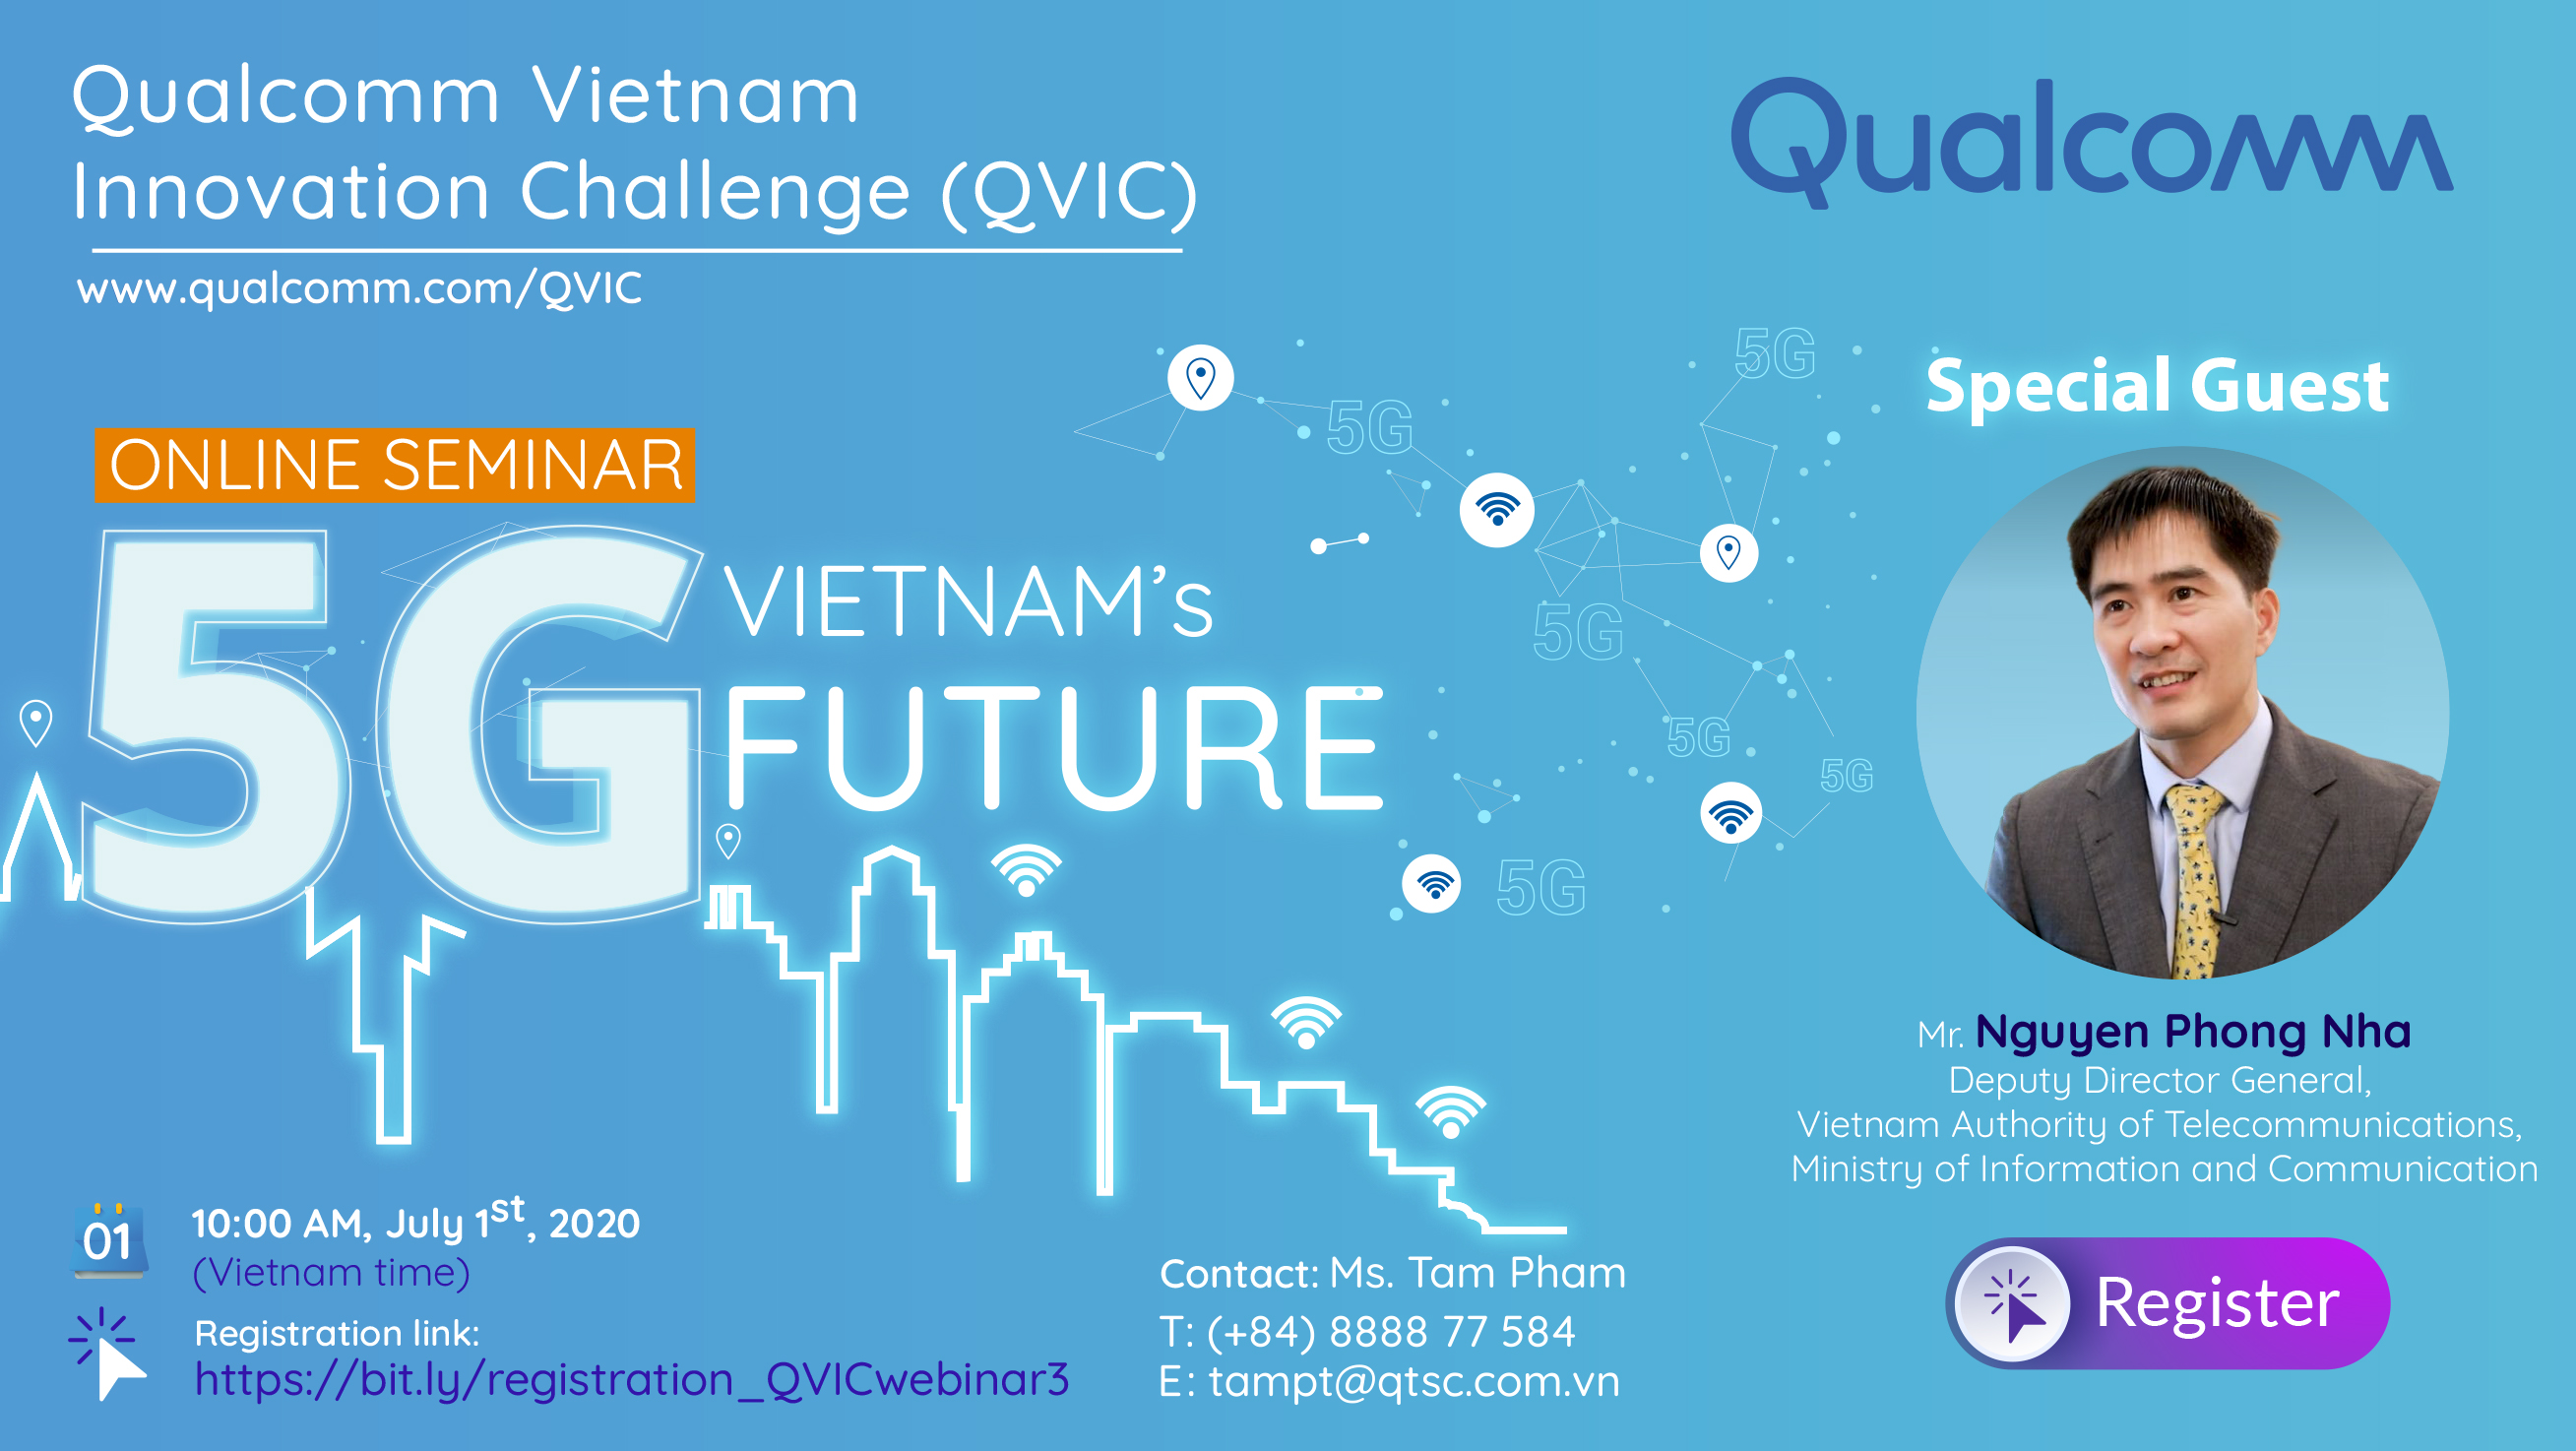 Invitation to the Online Seminar “Vietnam’s 5G Future”